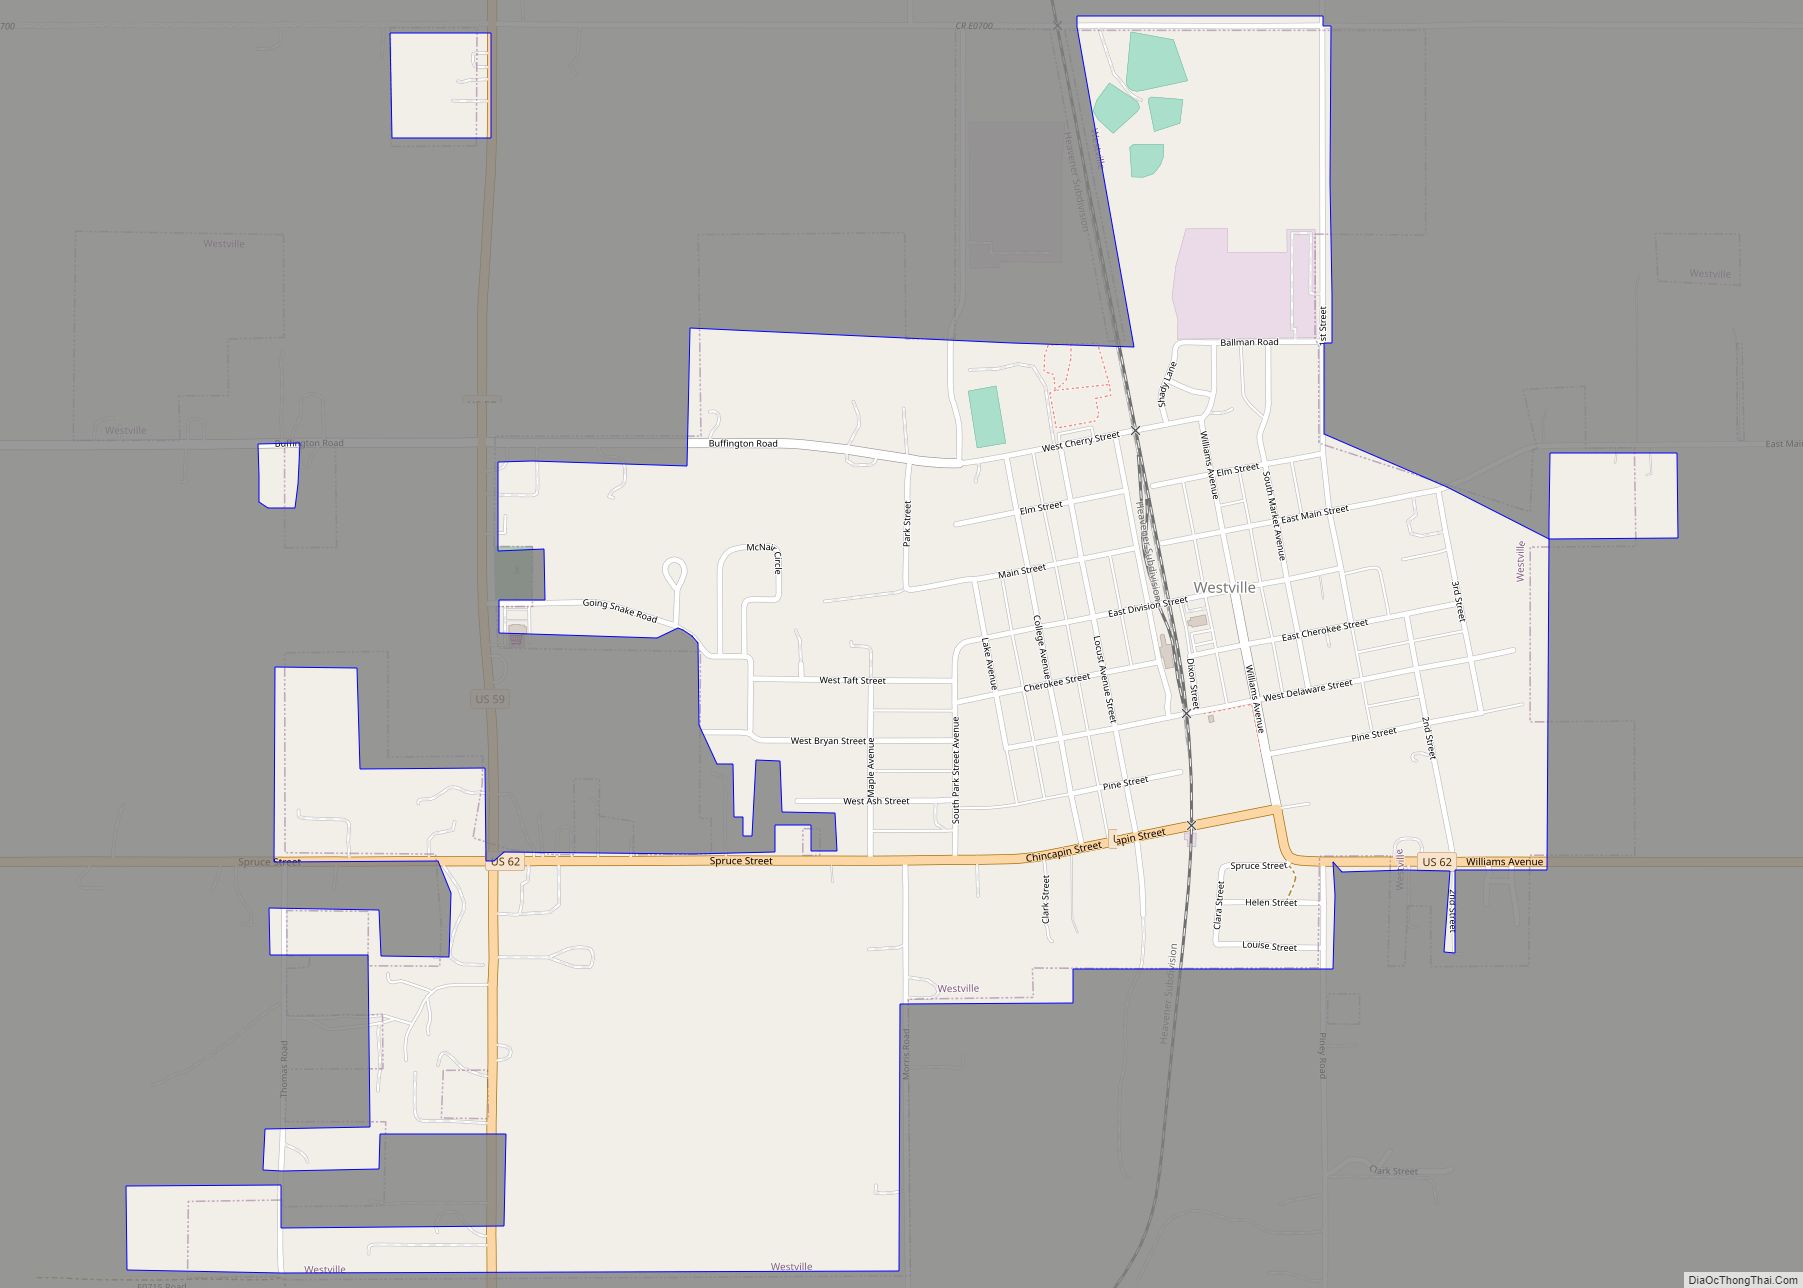 Map of Westville town, Oklahoma